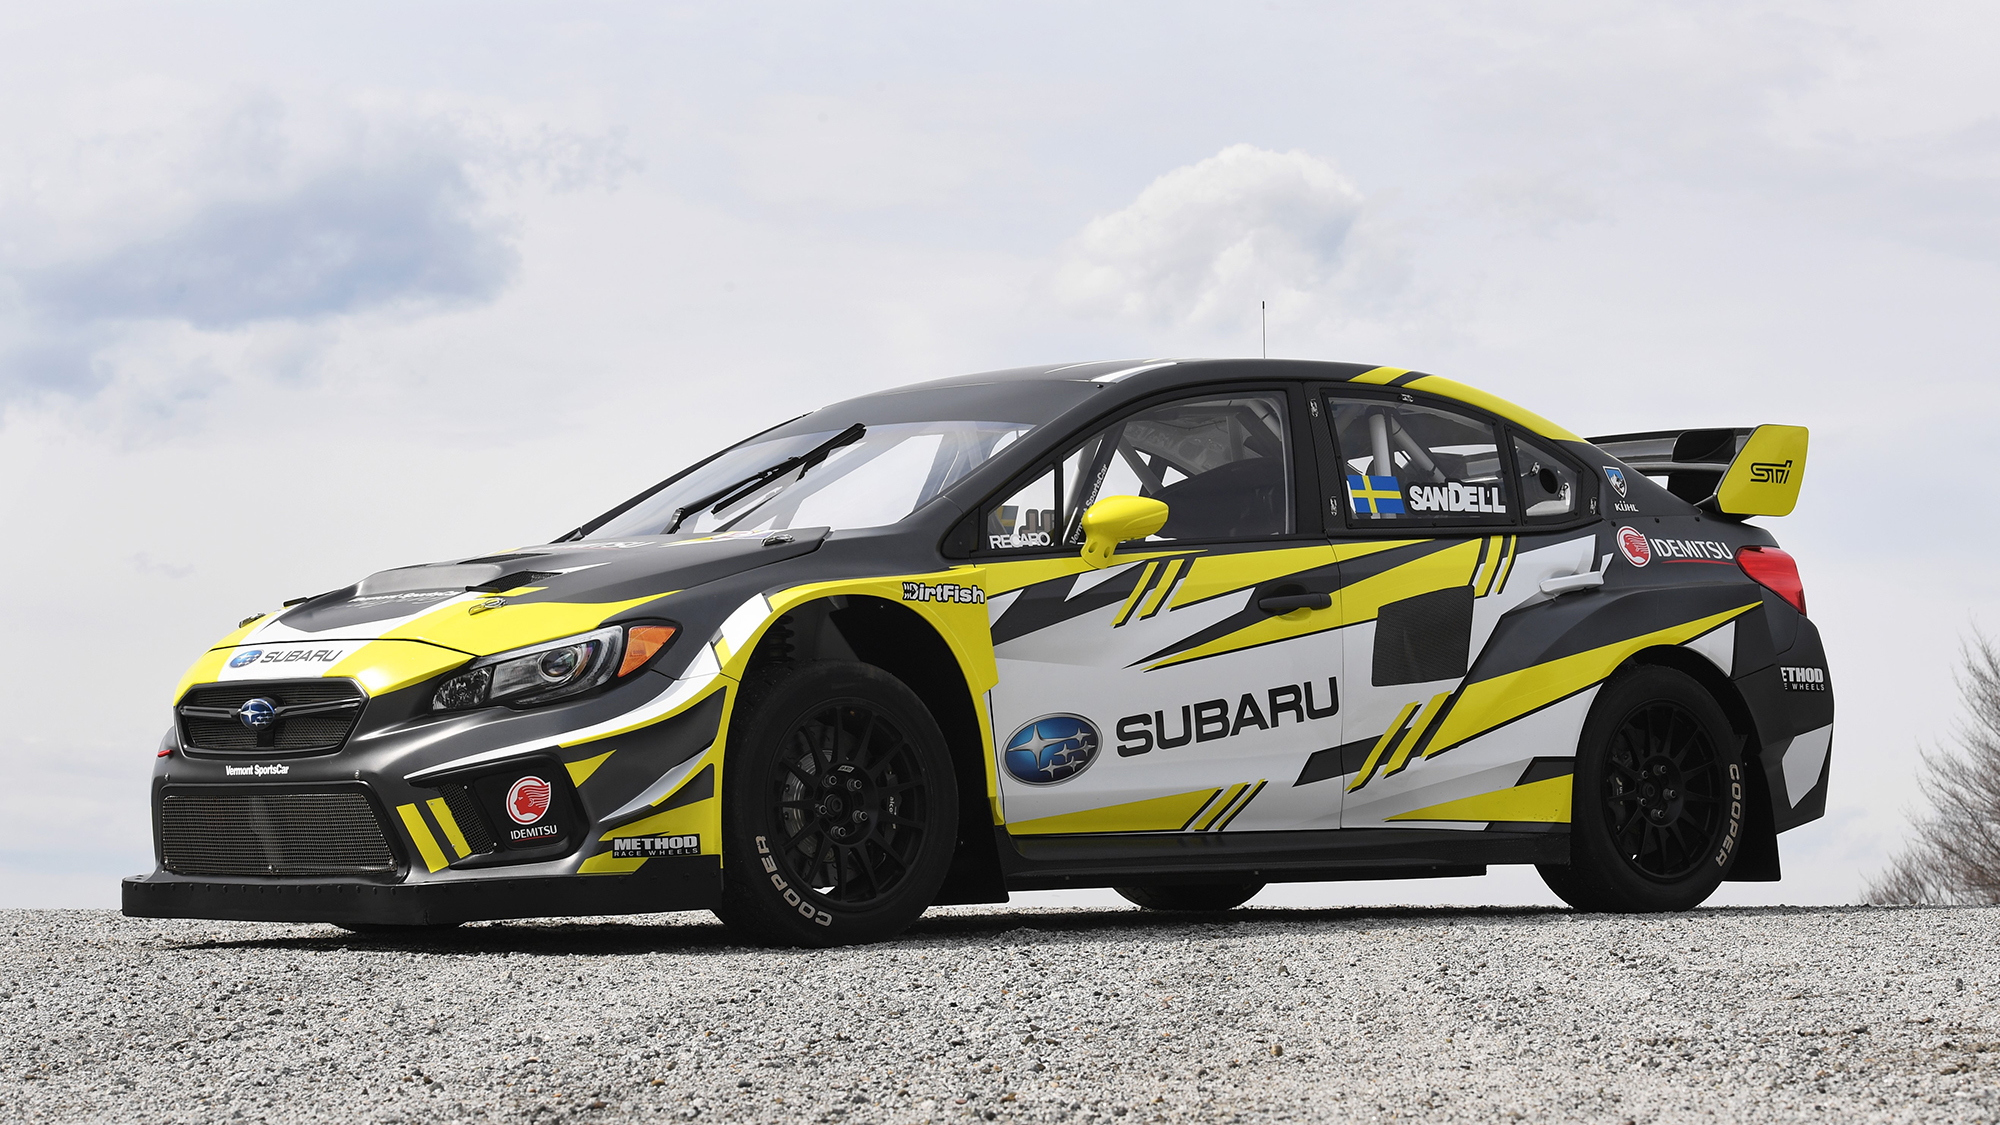 Patrik Sandell's Subaru Americas Rallycross Championship team